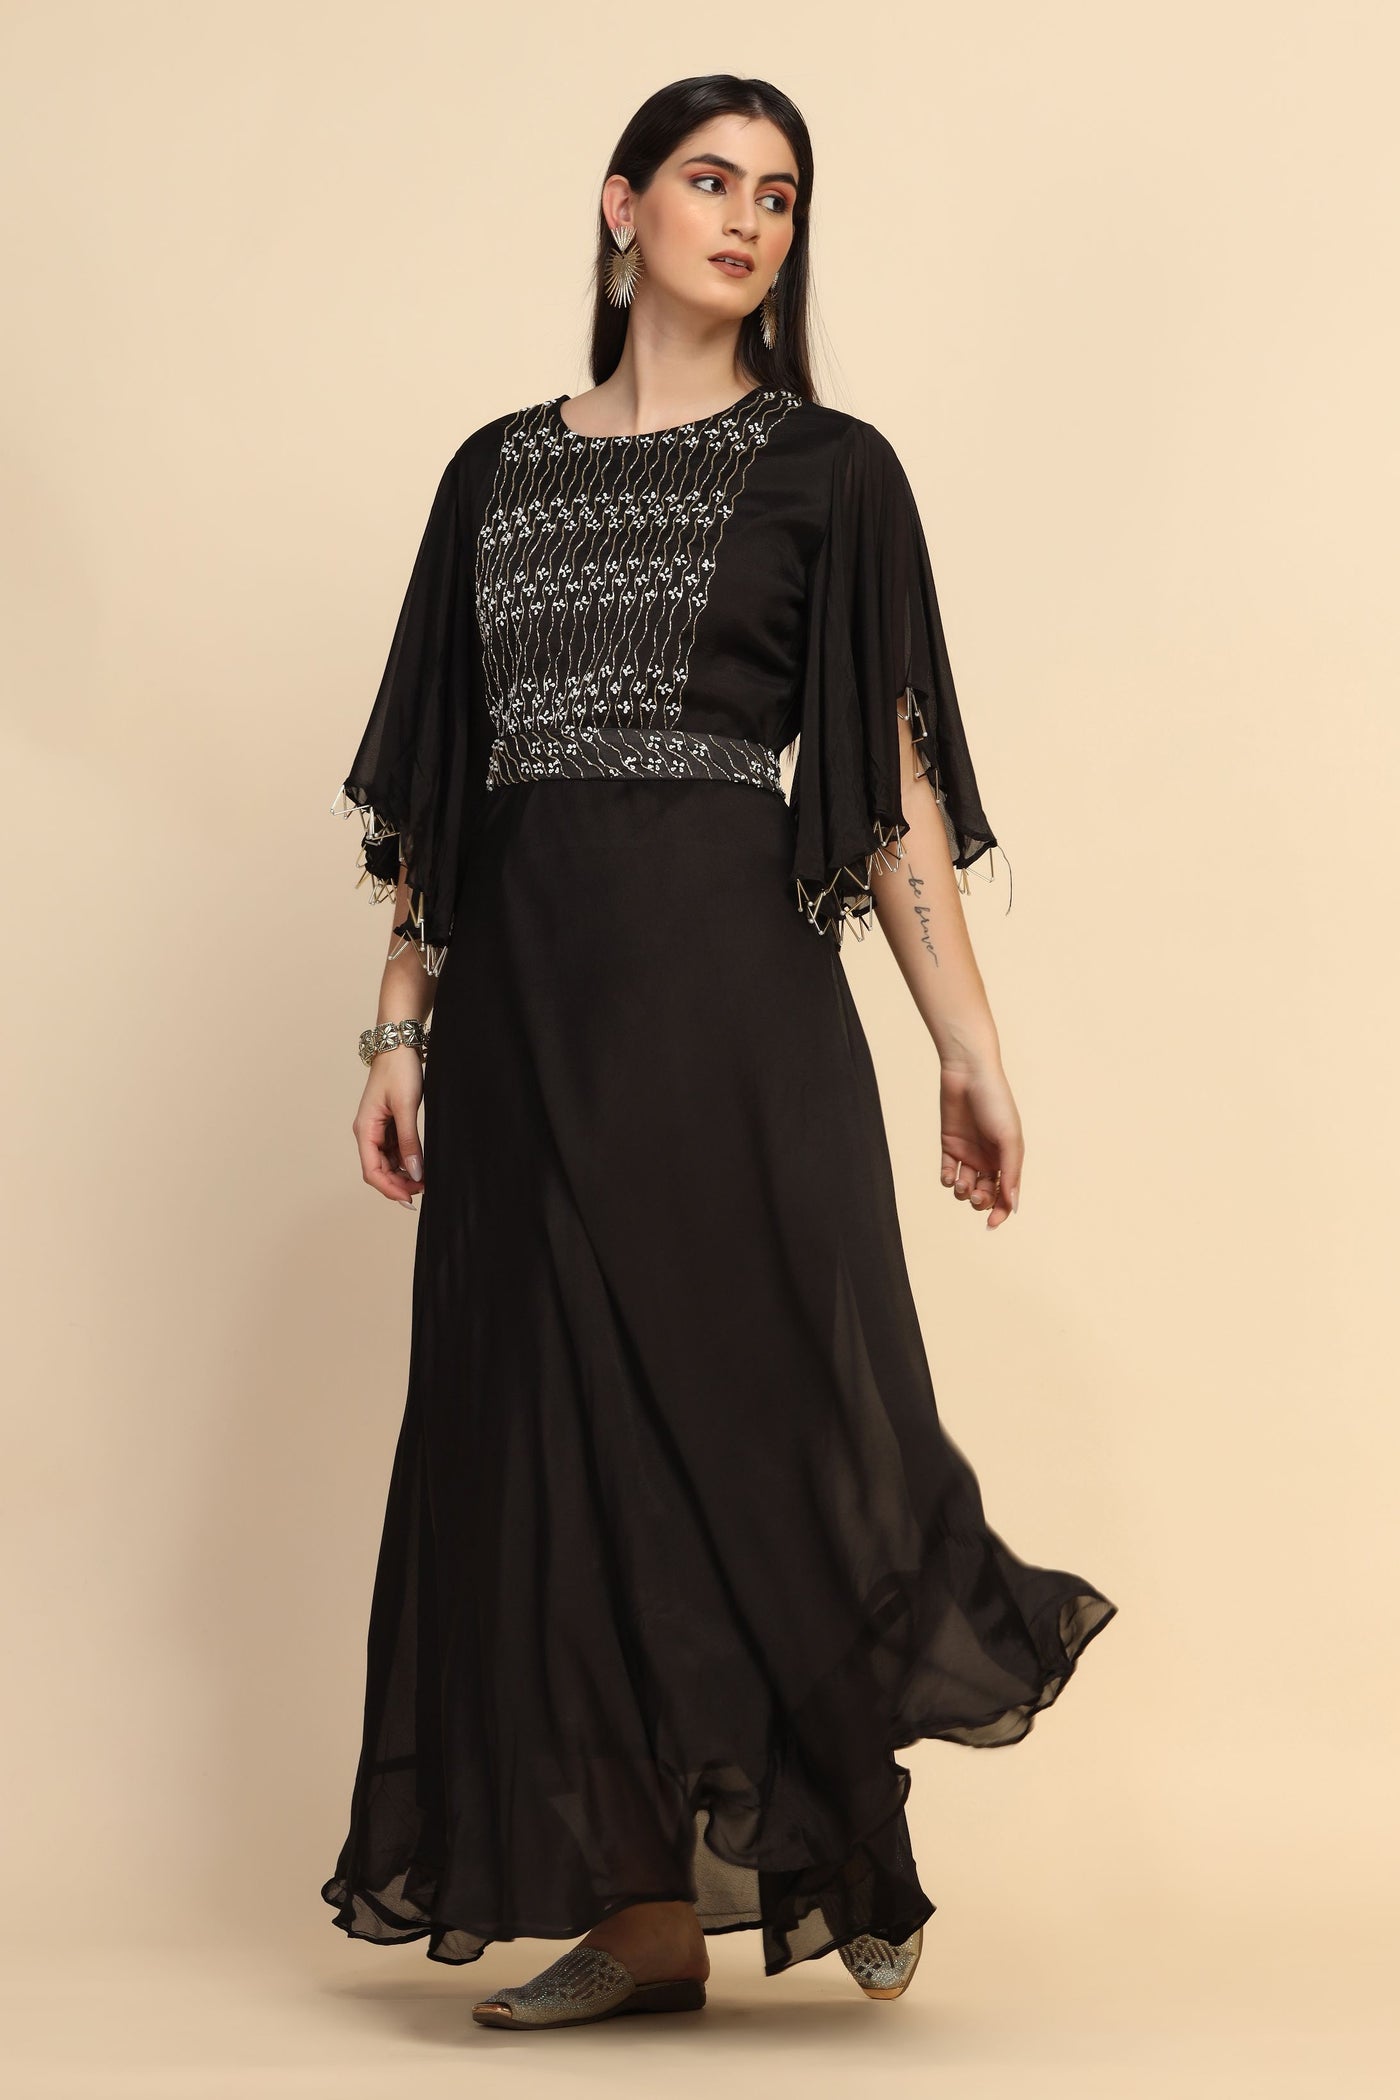 Gorgeous black color floral motif embroidered dress